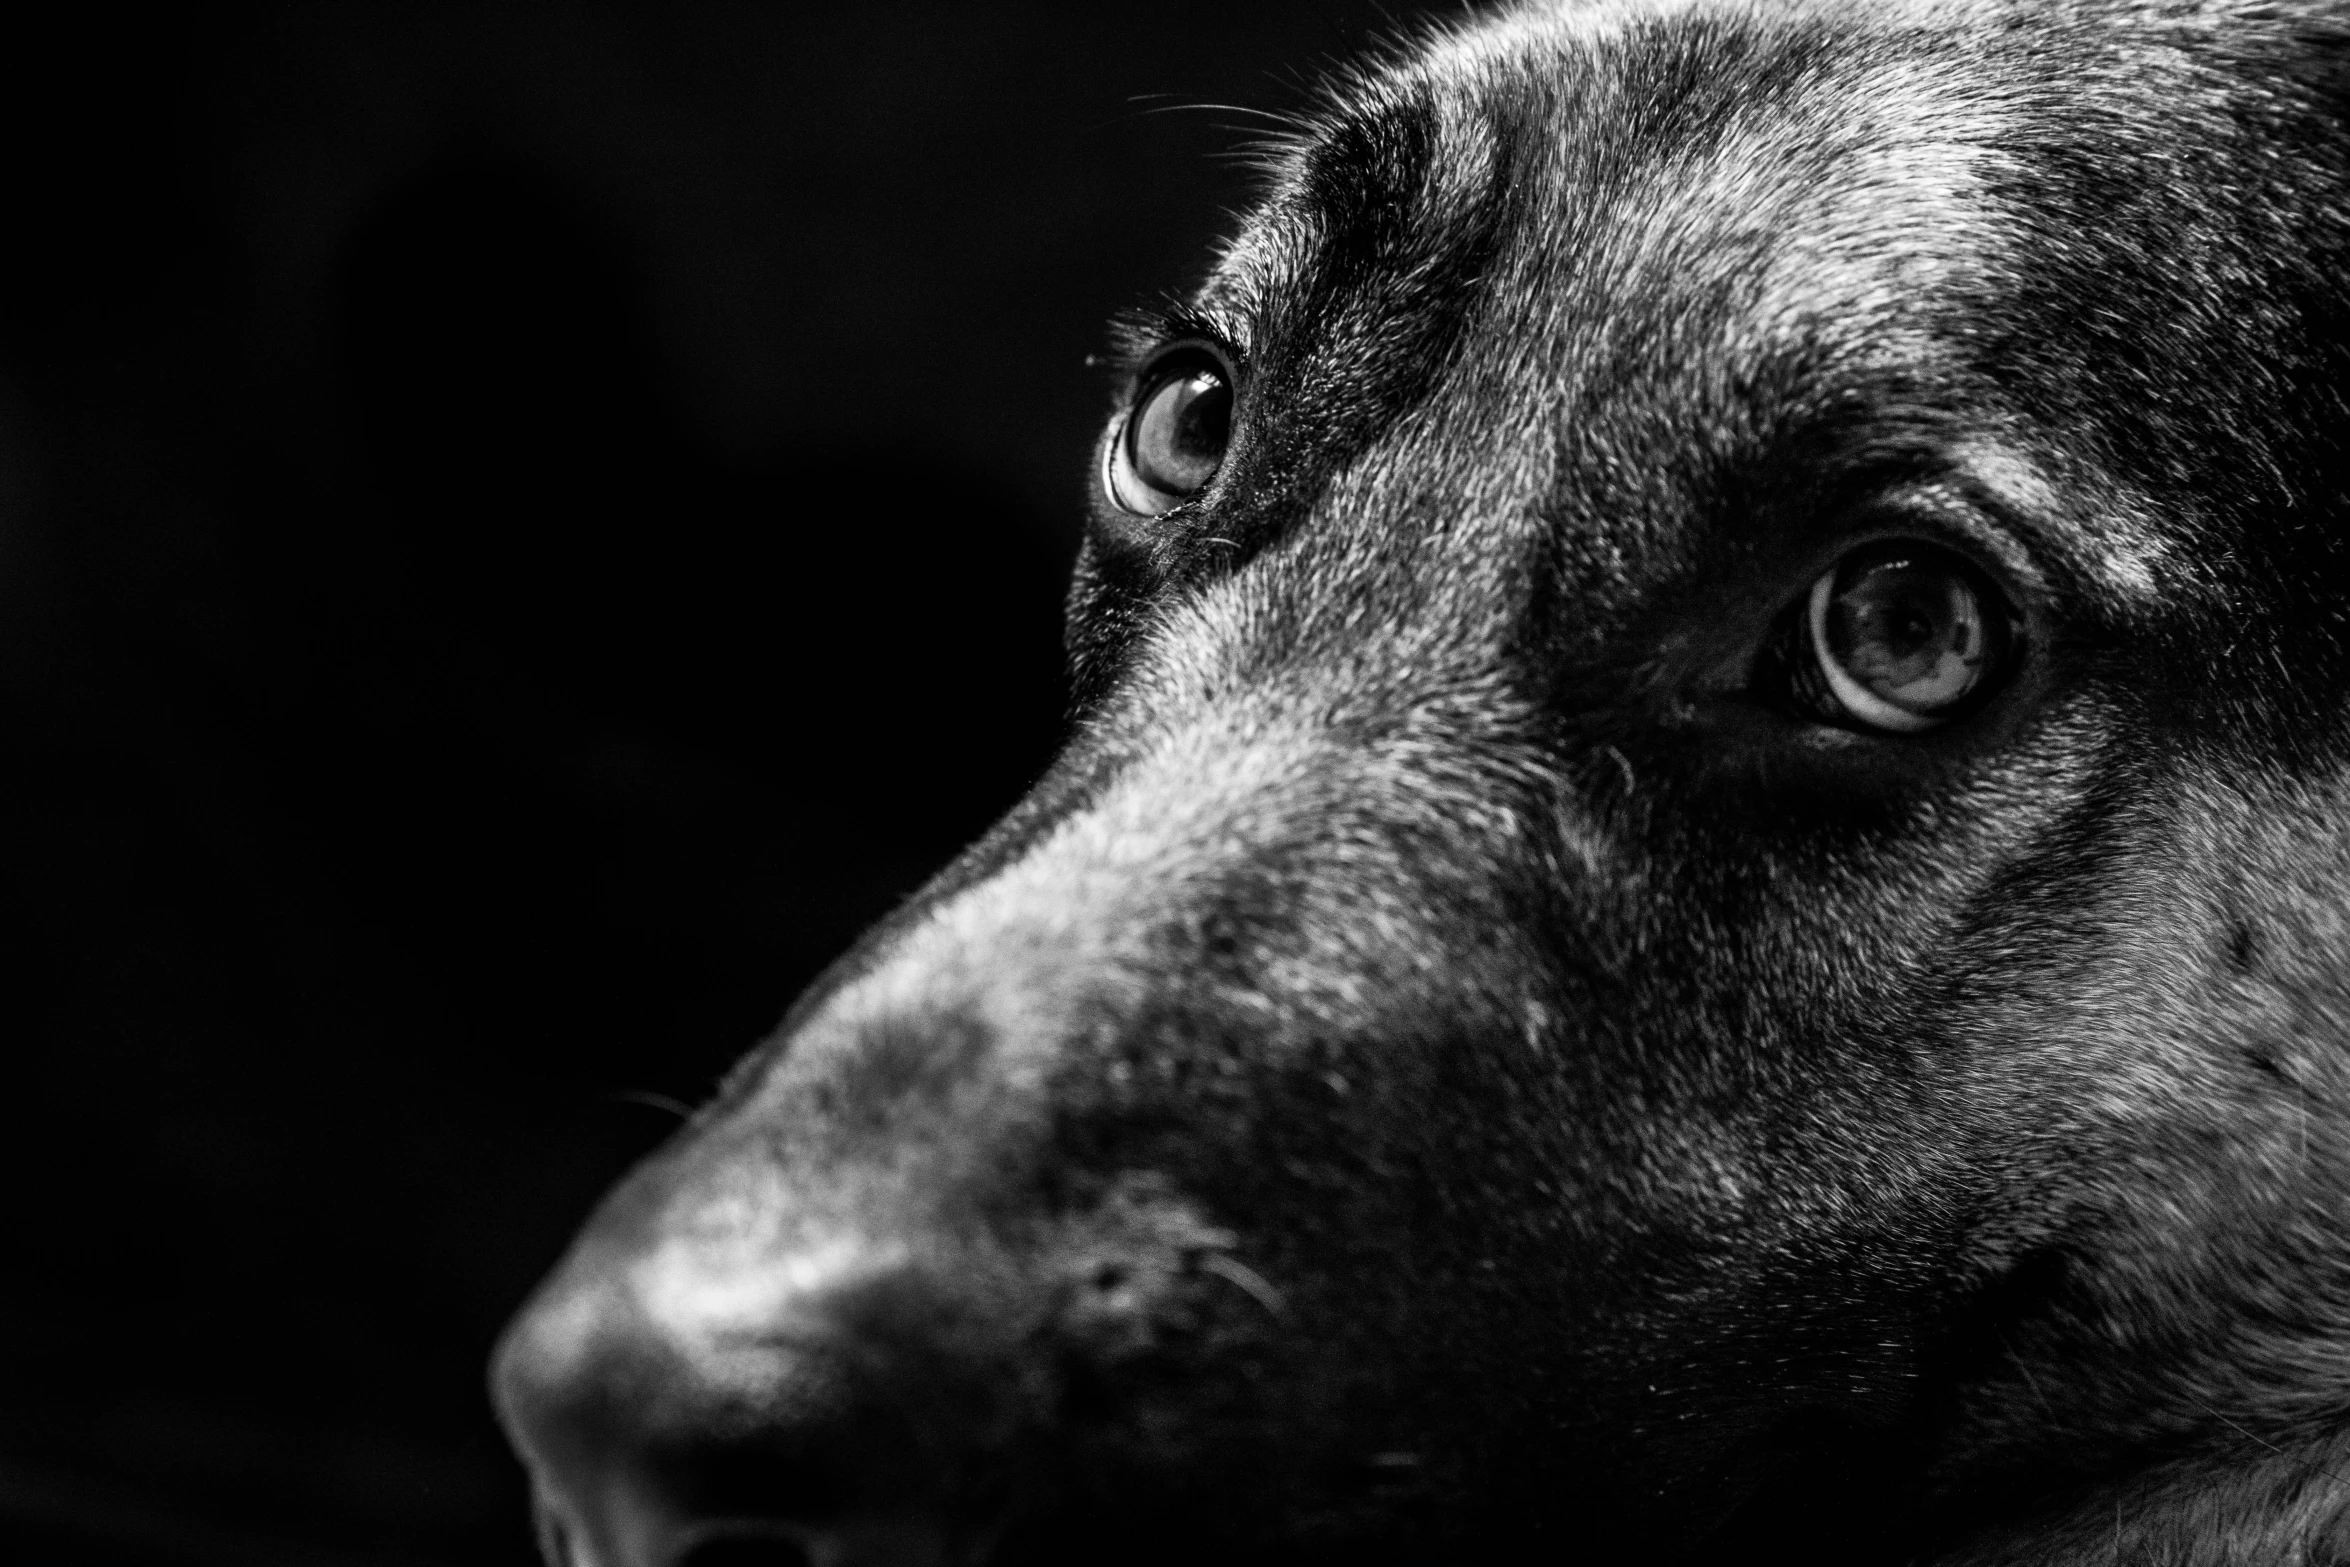 a close up image of a black dog